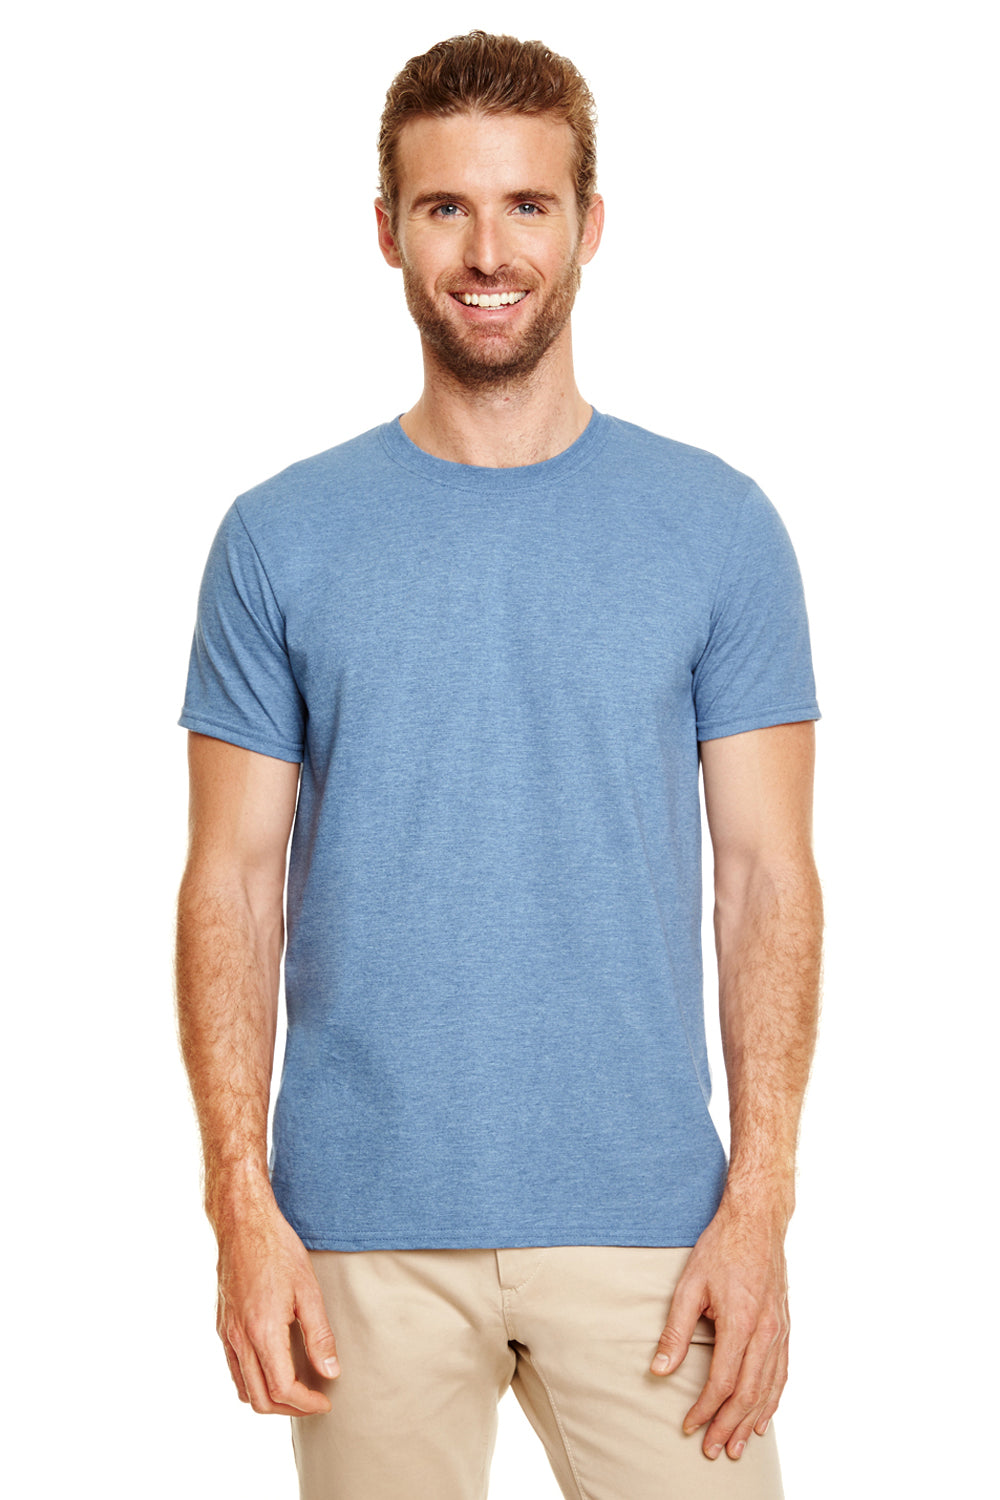 Gildan G640 Mens Softstyle Short Sleeve Crewneck T-Shirt Heather Indigo Blue Front